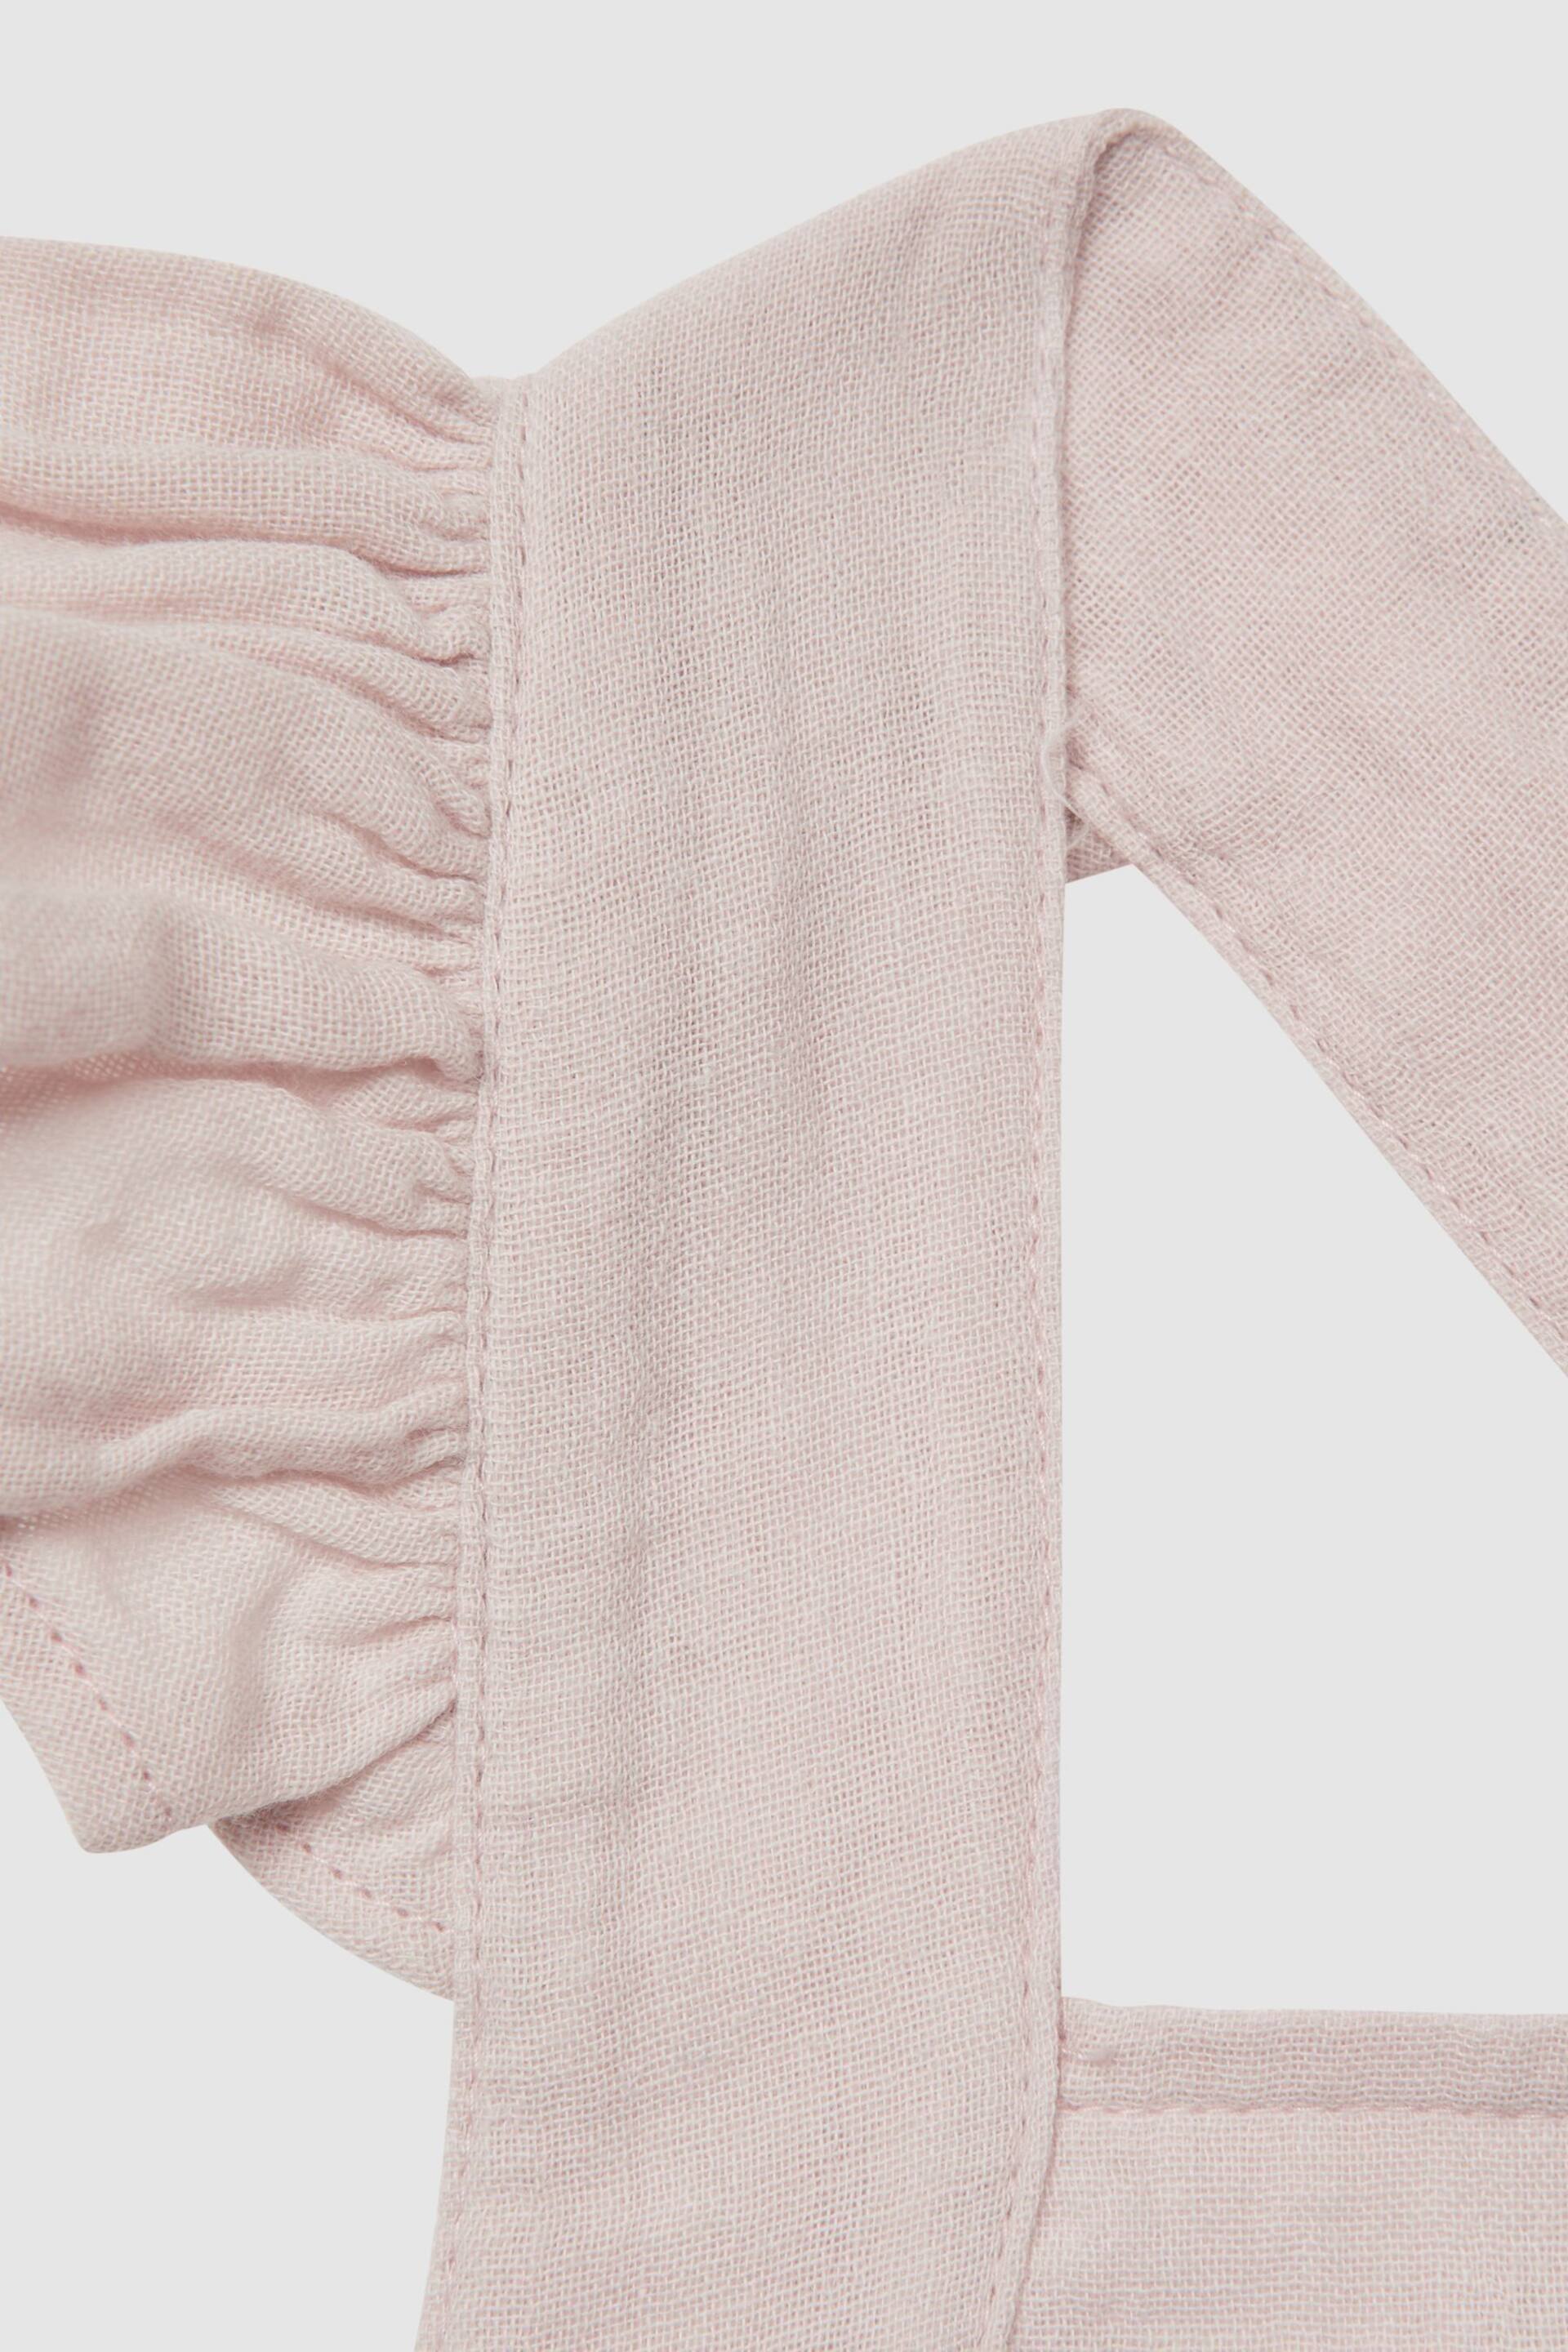 Reiss Pink Cerys Junior Cotton Cross Back Dress - Image 6 of 6